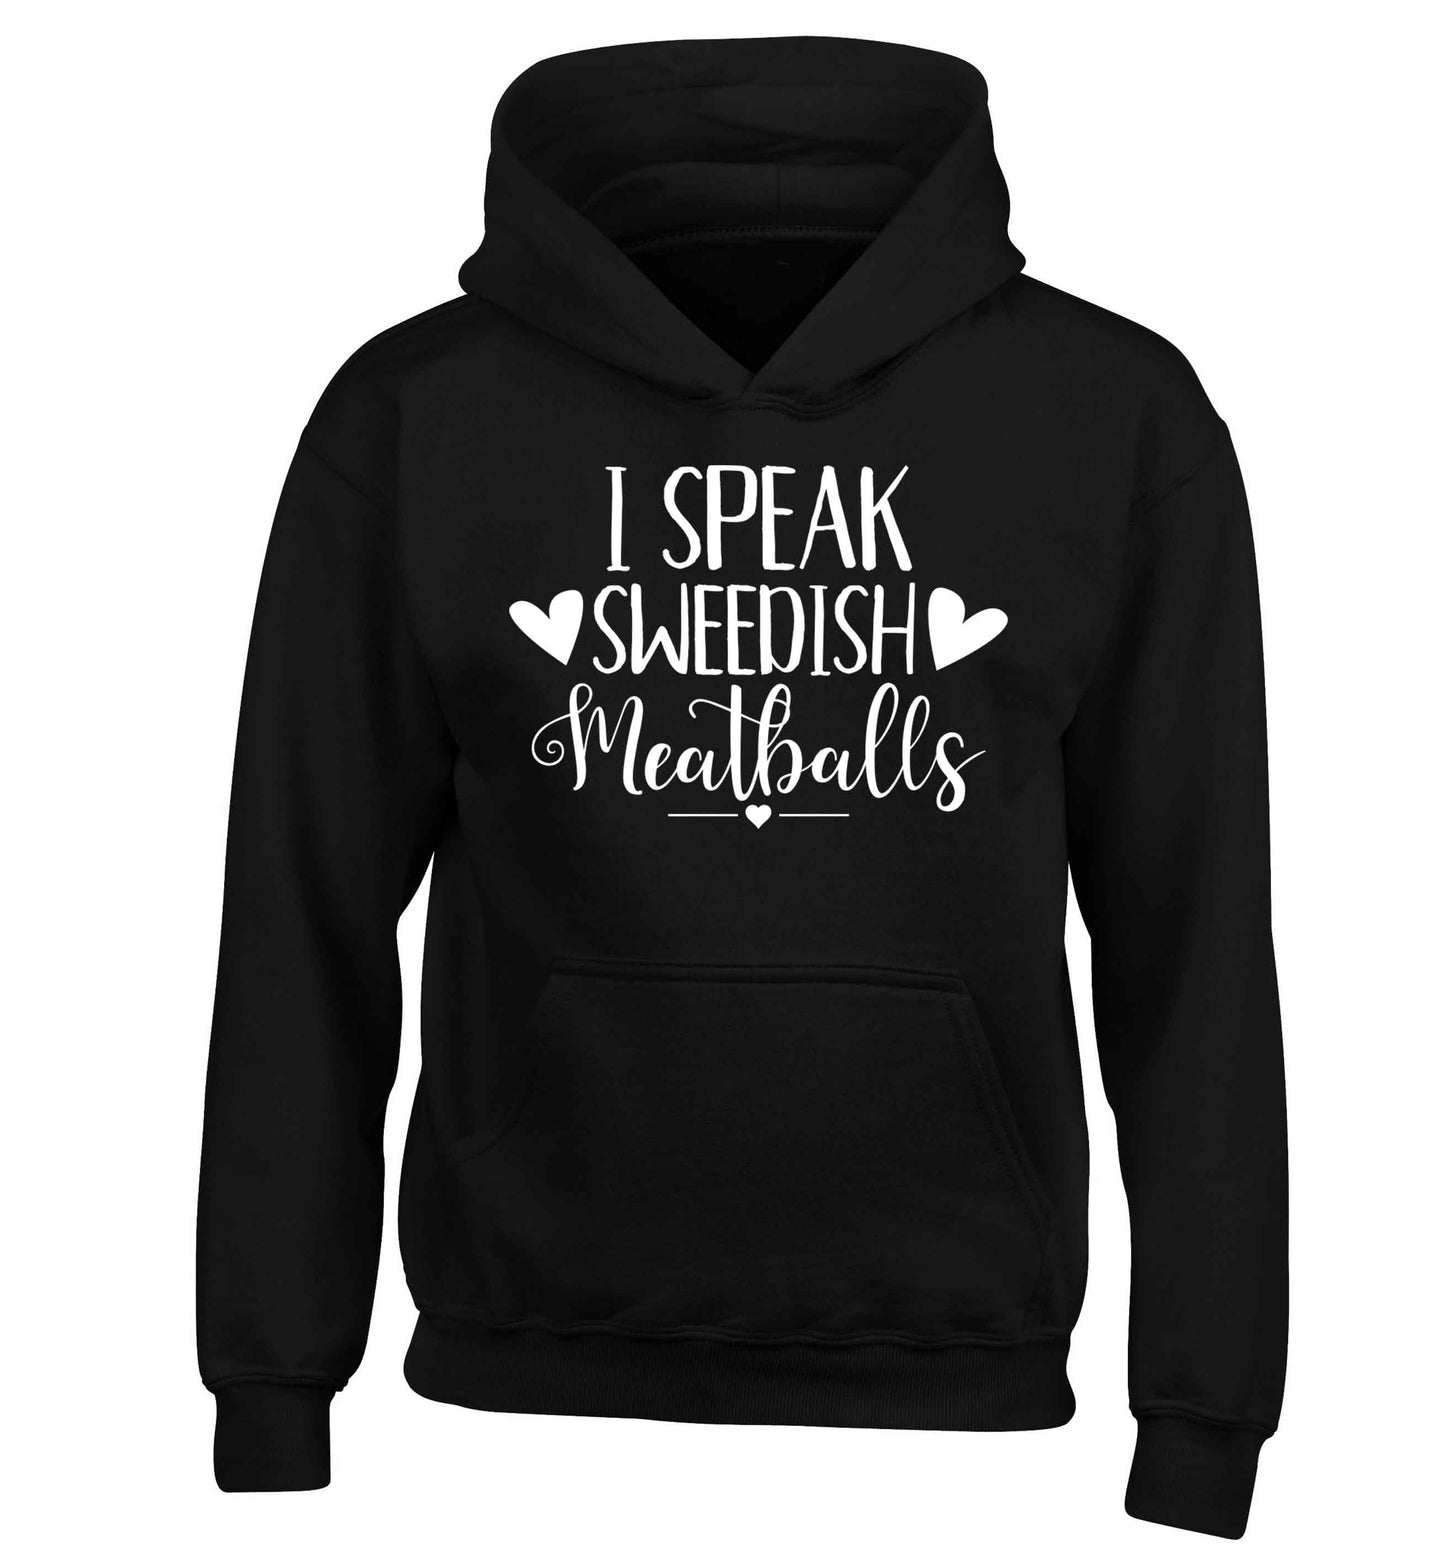 I speak sweedish...meatballs children's black hoodie 12-13 Years